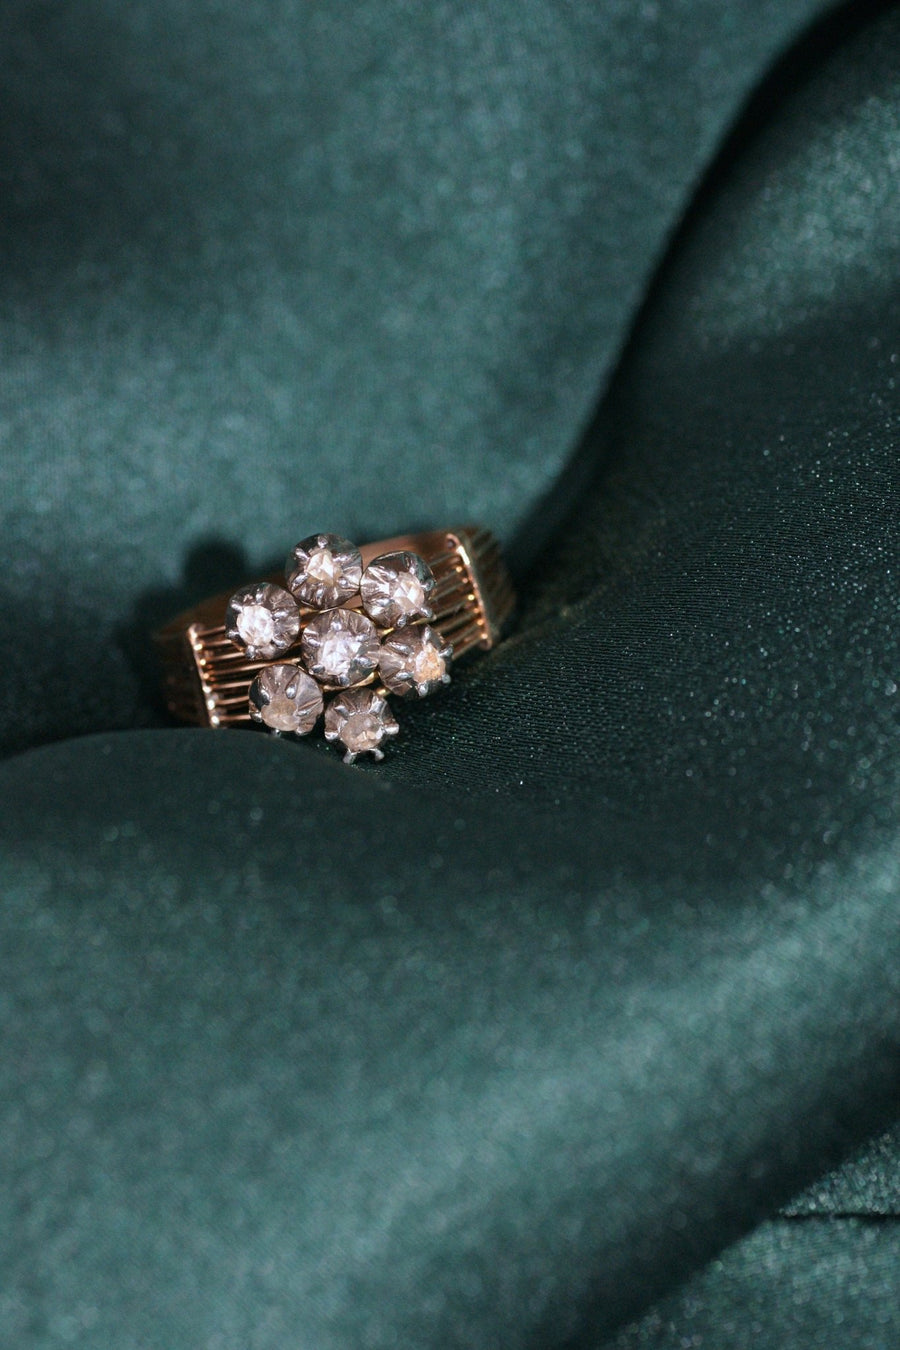 Pink gold diamond daisy ring - Penelope Gallery